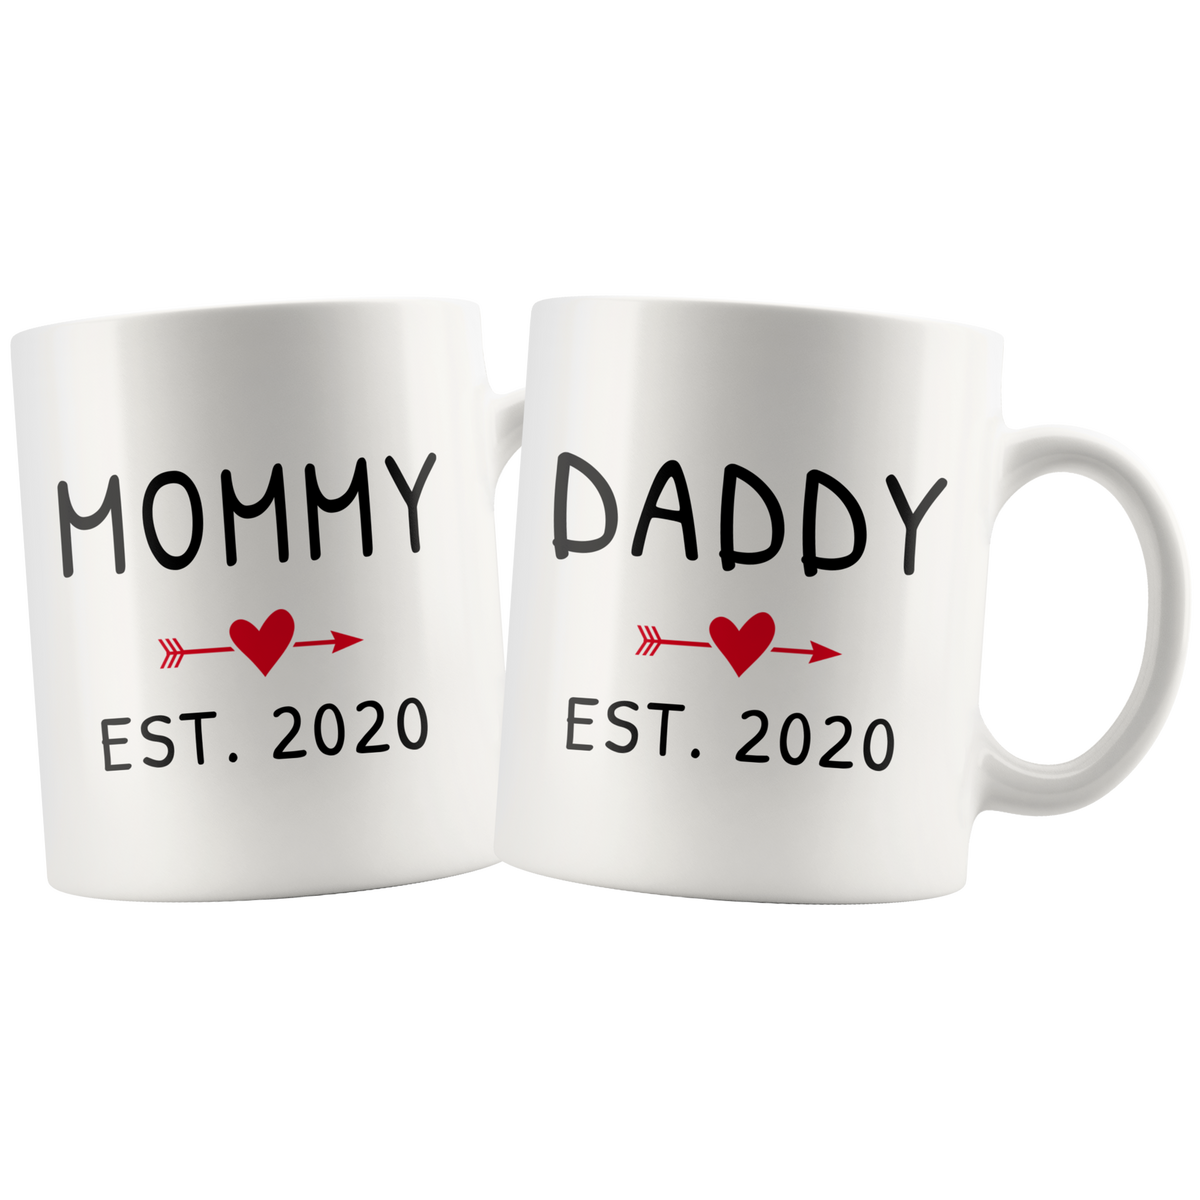 New Parents Mug Set For Expectant Parents - Mommy Daddy EST 2020 Set Of 2 11oz Mugs